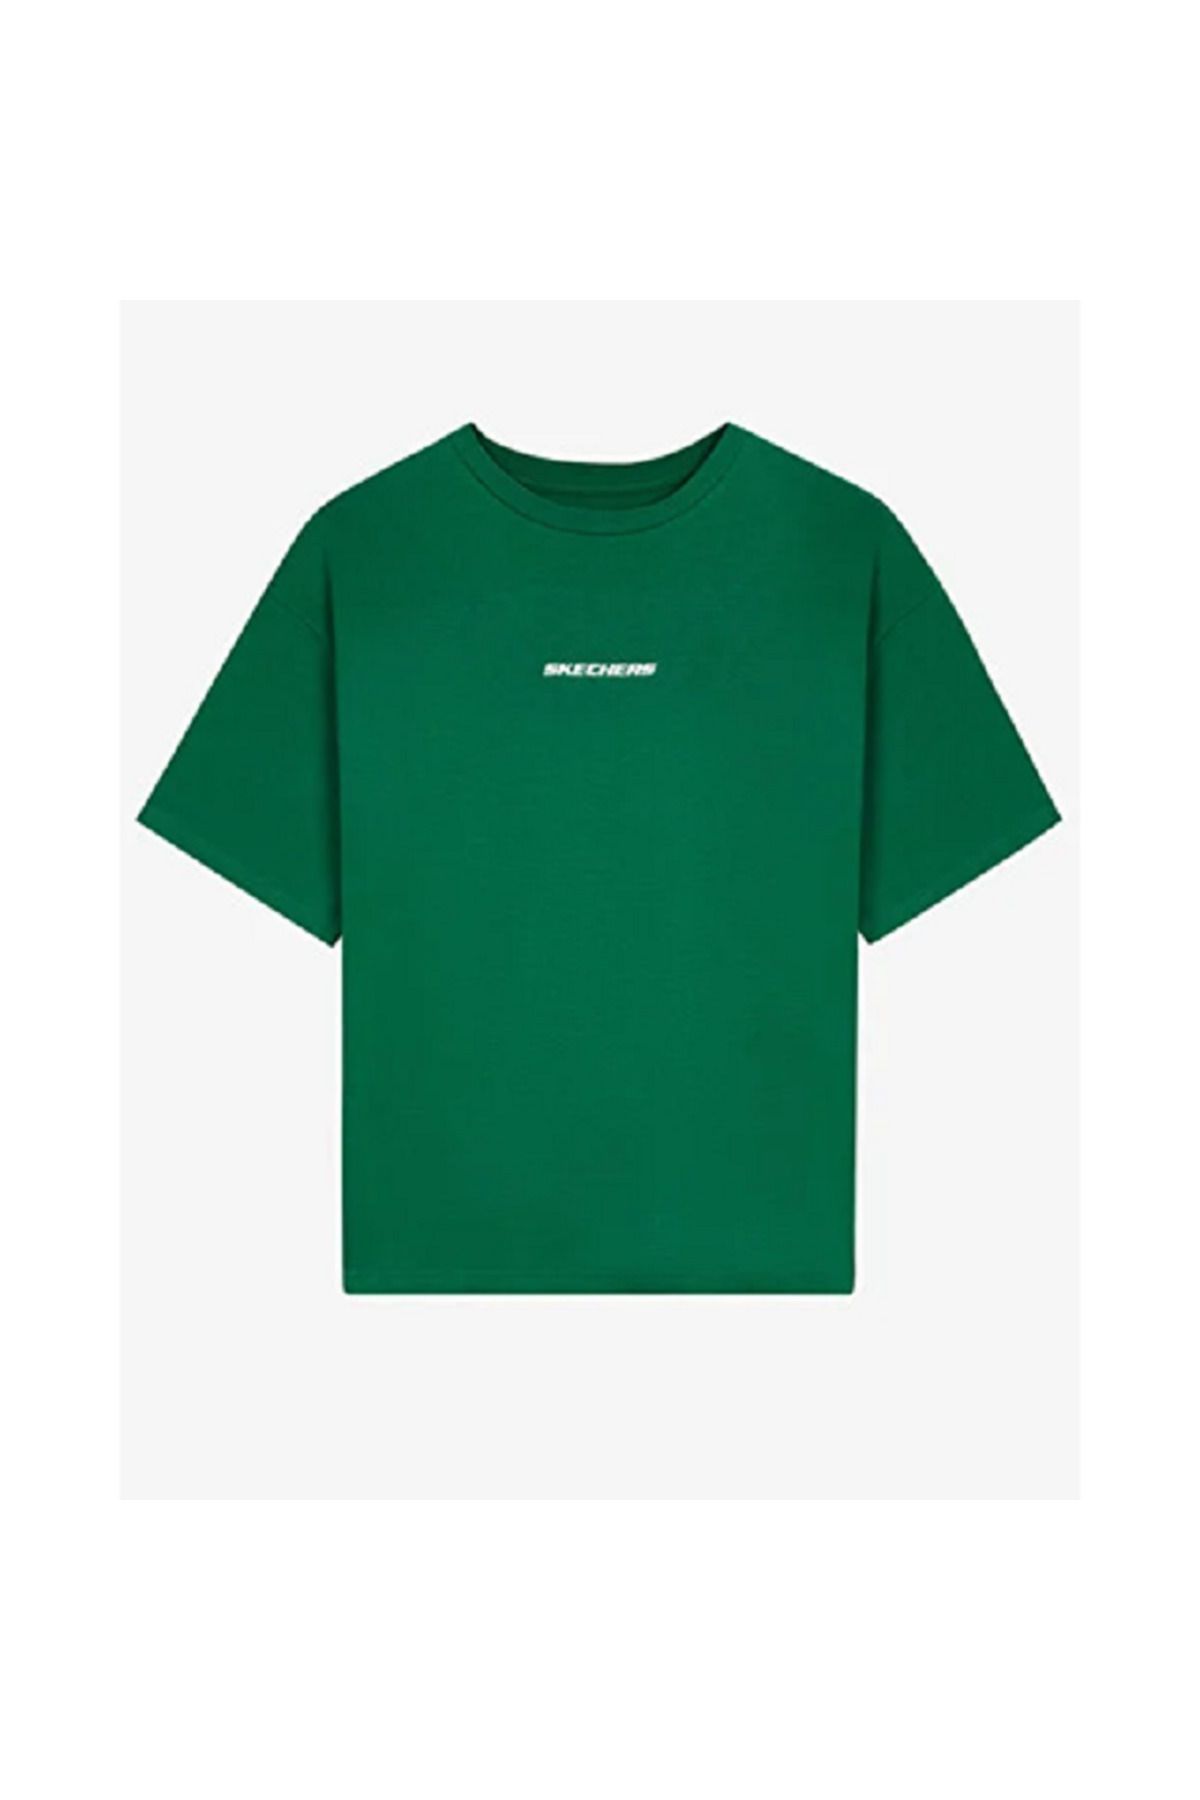 Skechers M Graphic Tee Oversize T-Shirt S232404-300